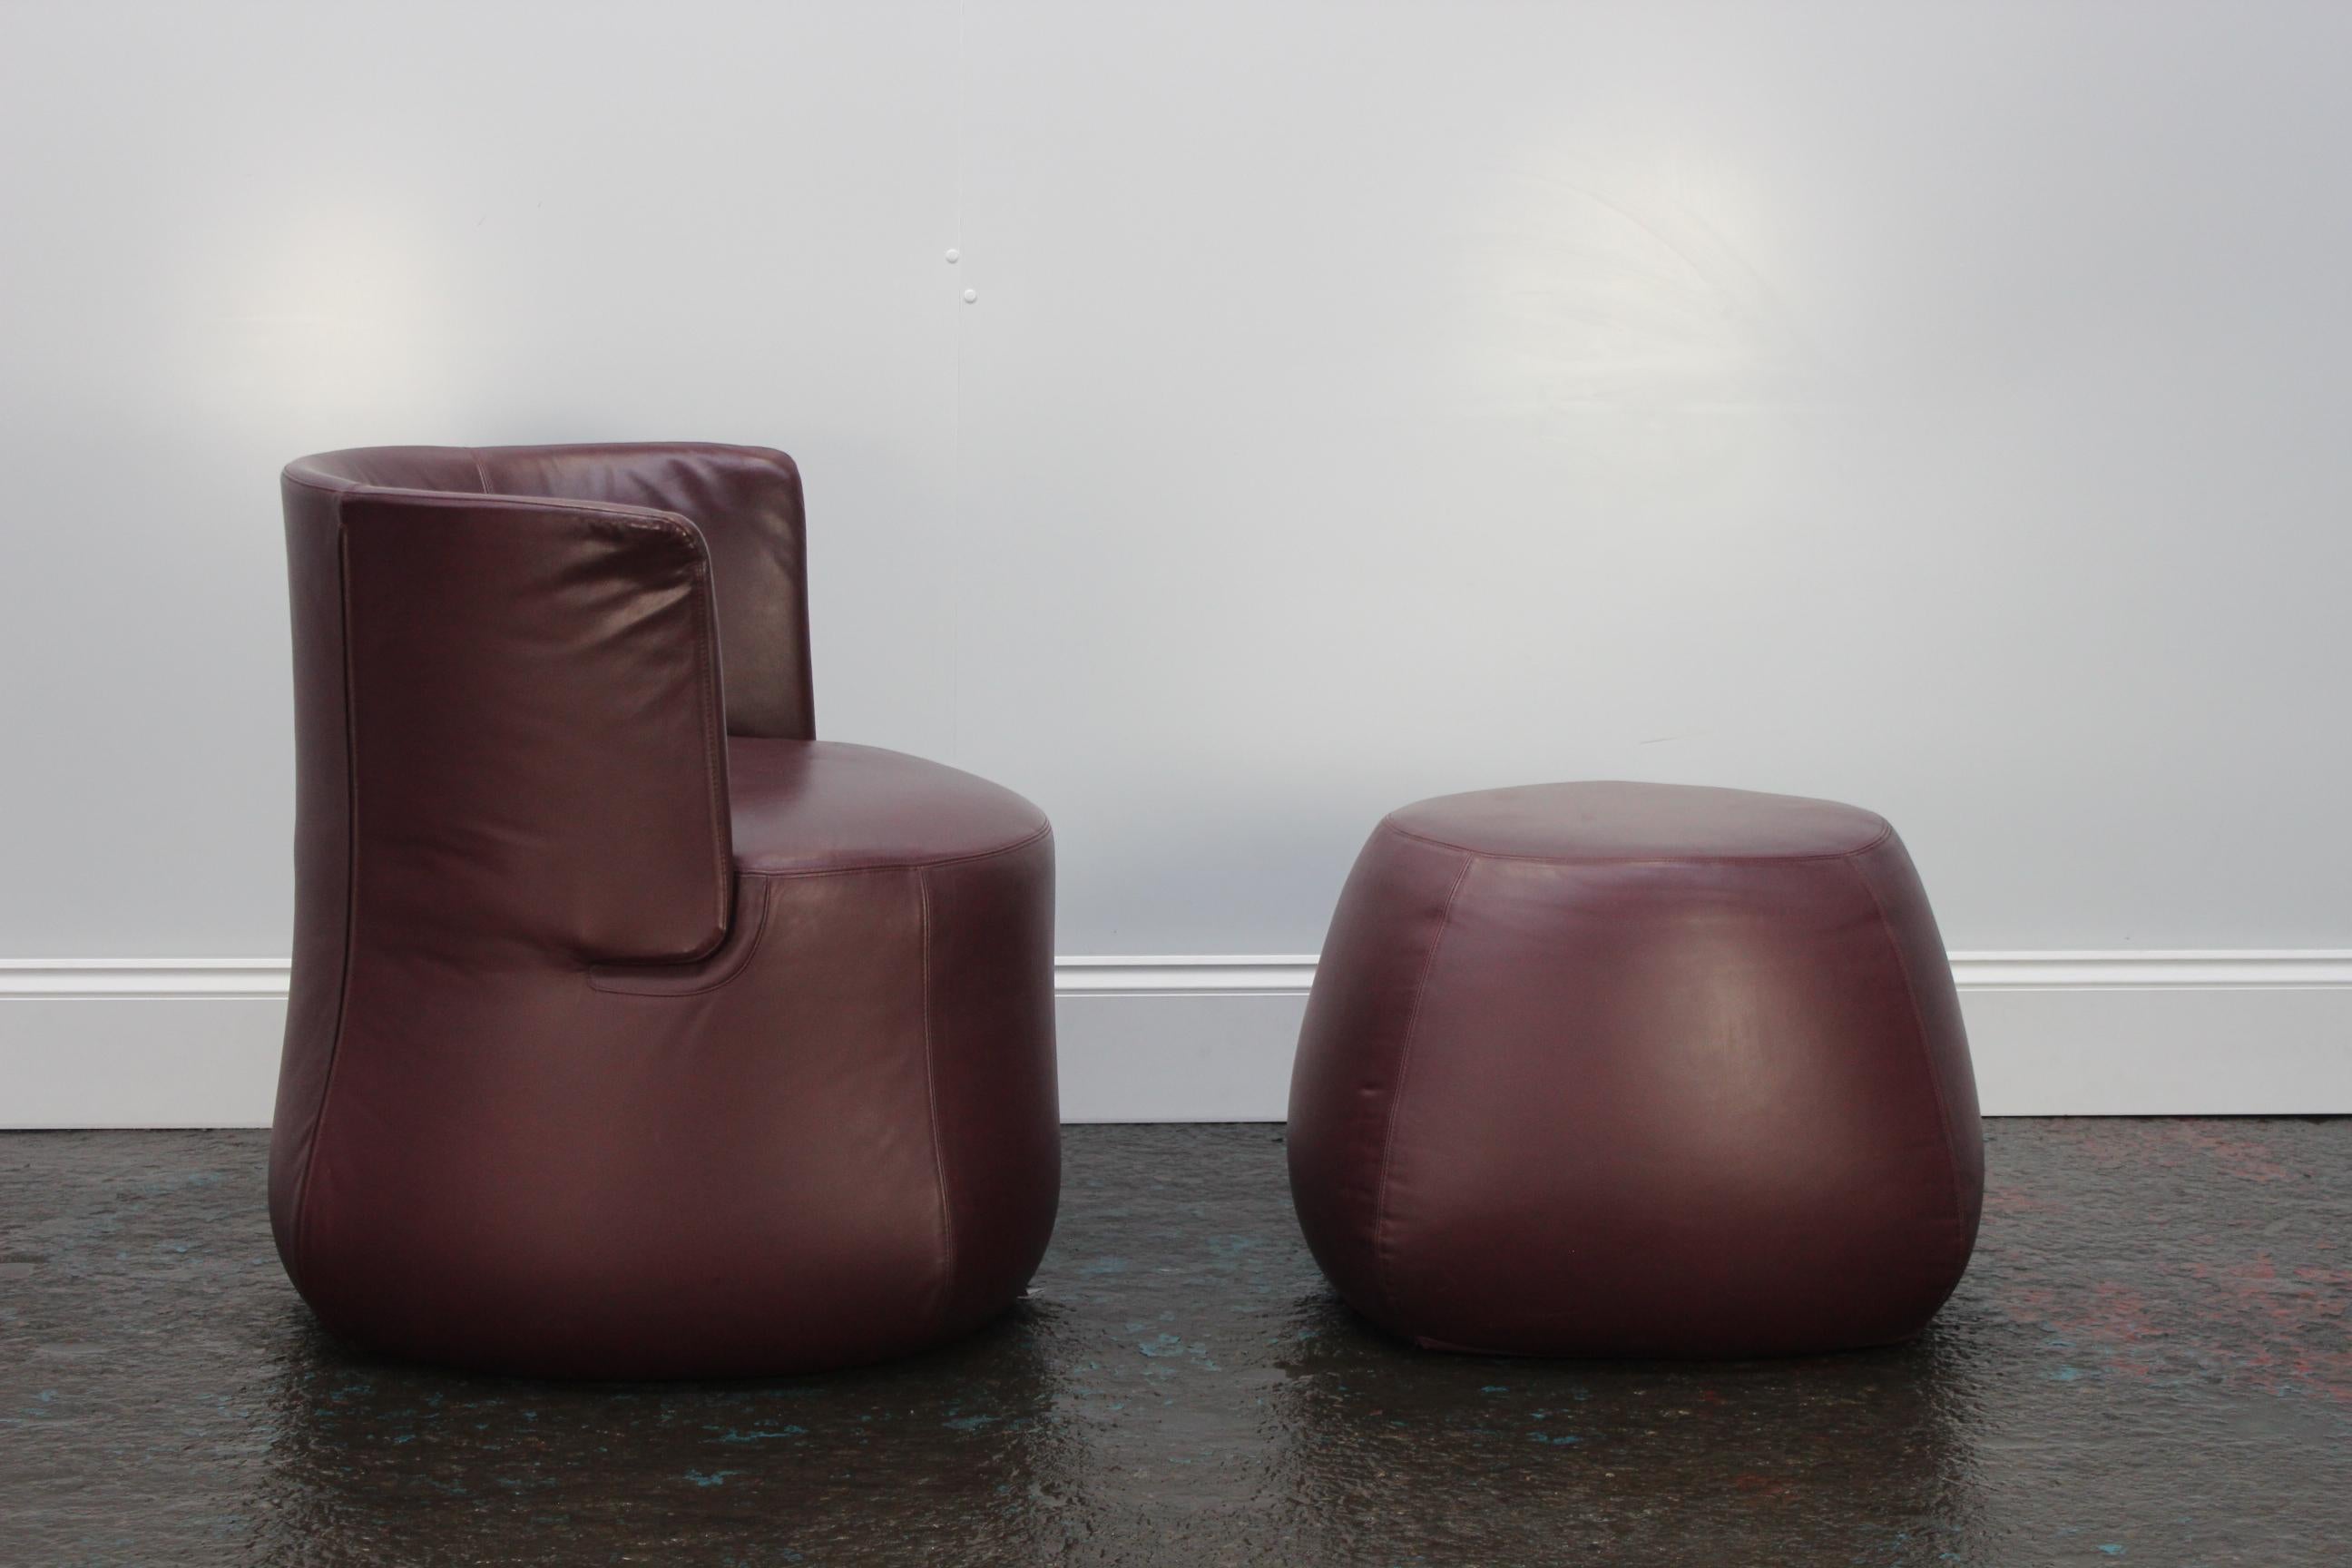 Italian B&B Italia “Fat Sofa” Armchair and Pouf in Aubergine Purple “Gamma” Leather